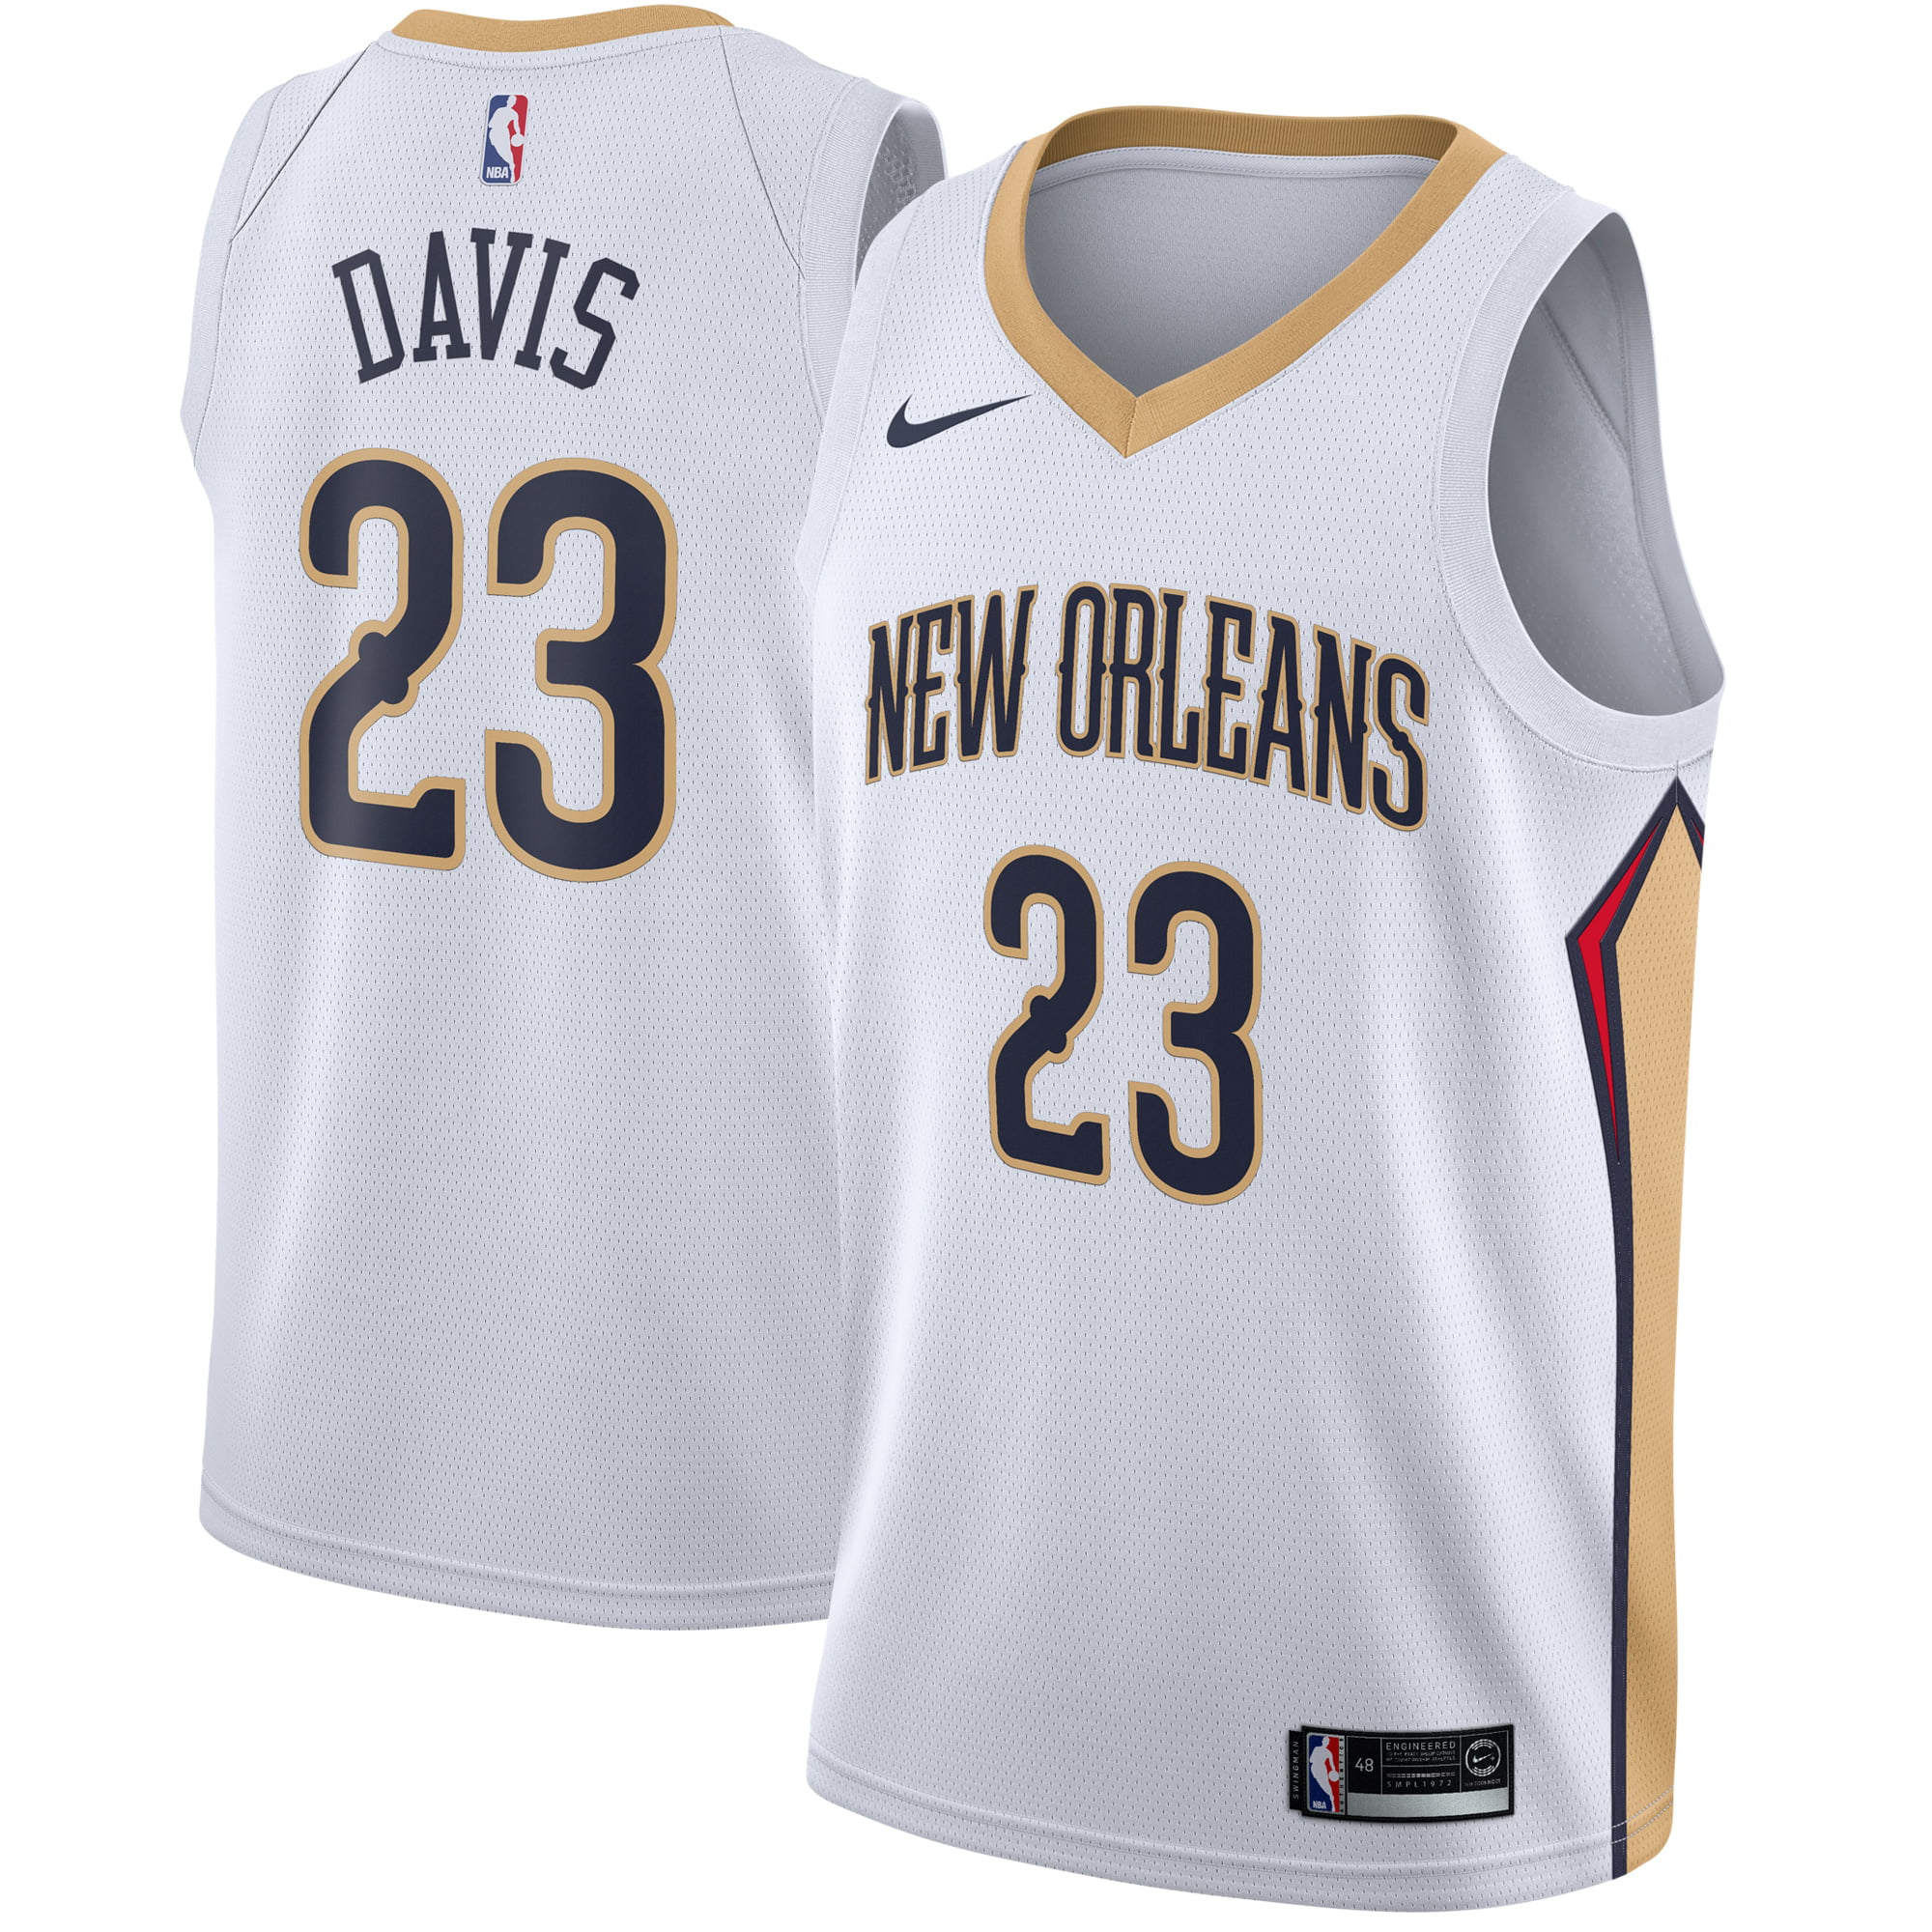 anthony davis new orleans jersey